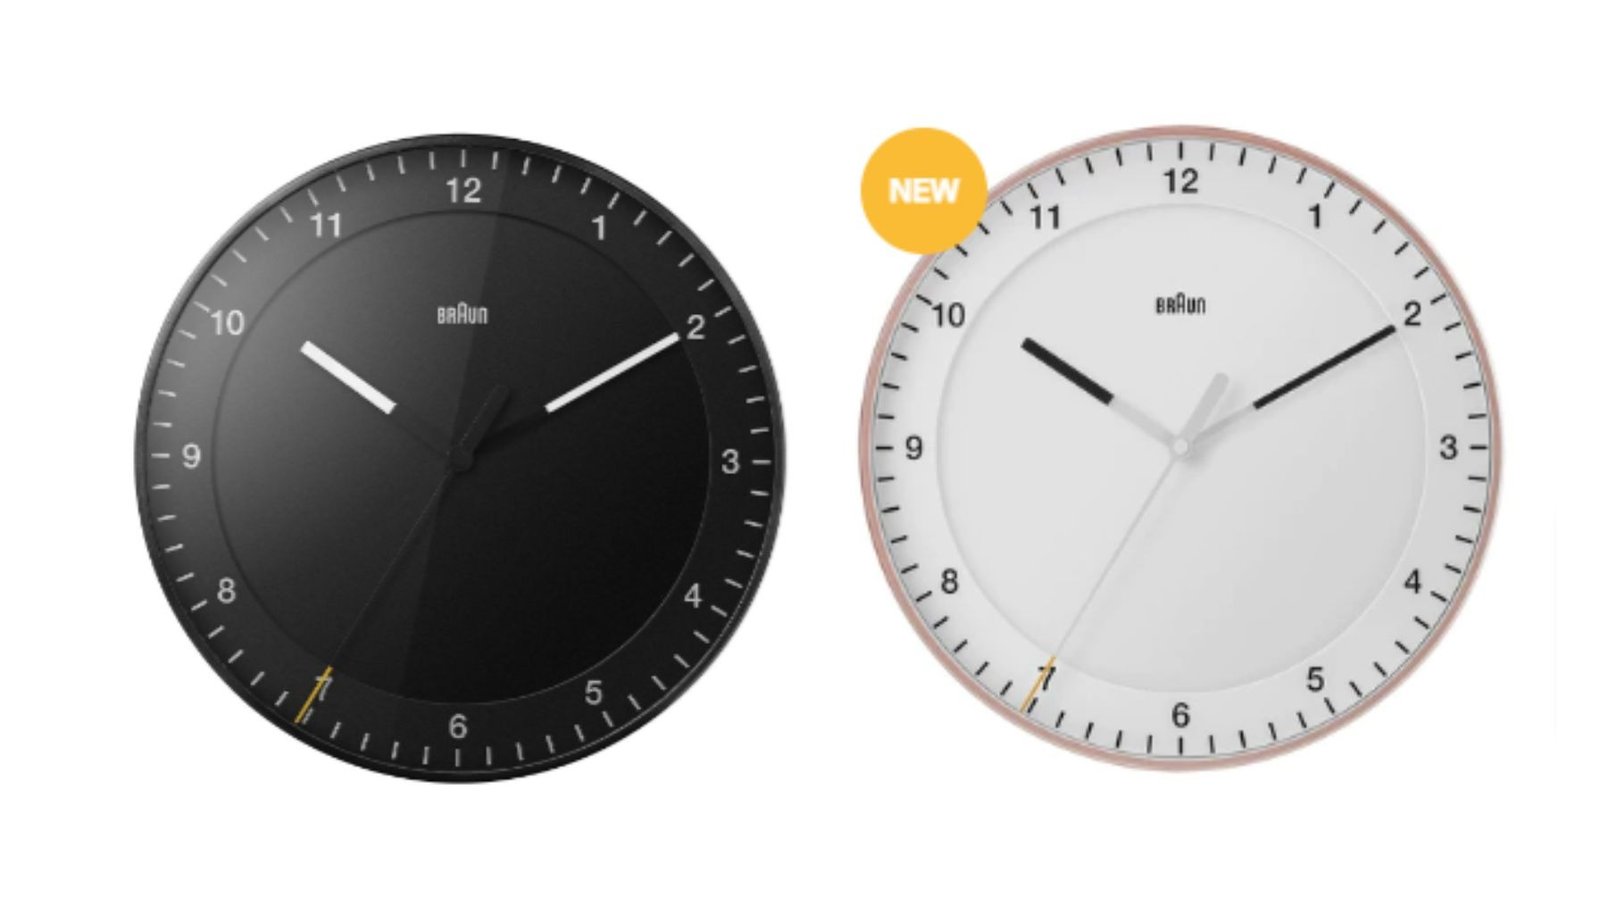 Braun Wall Clocks Review